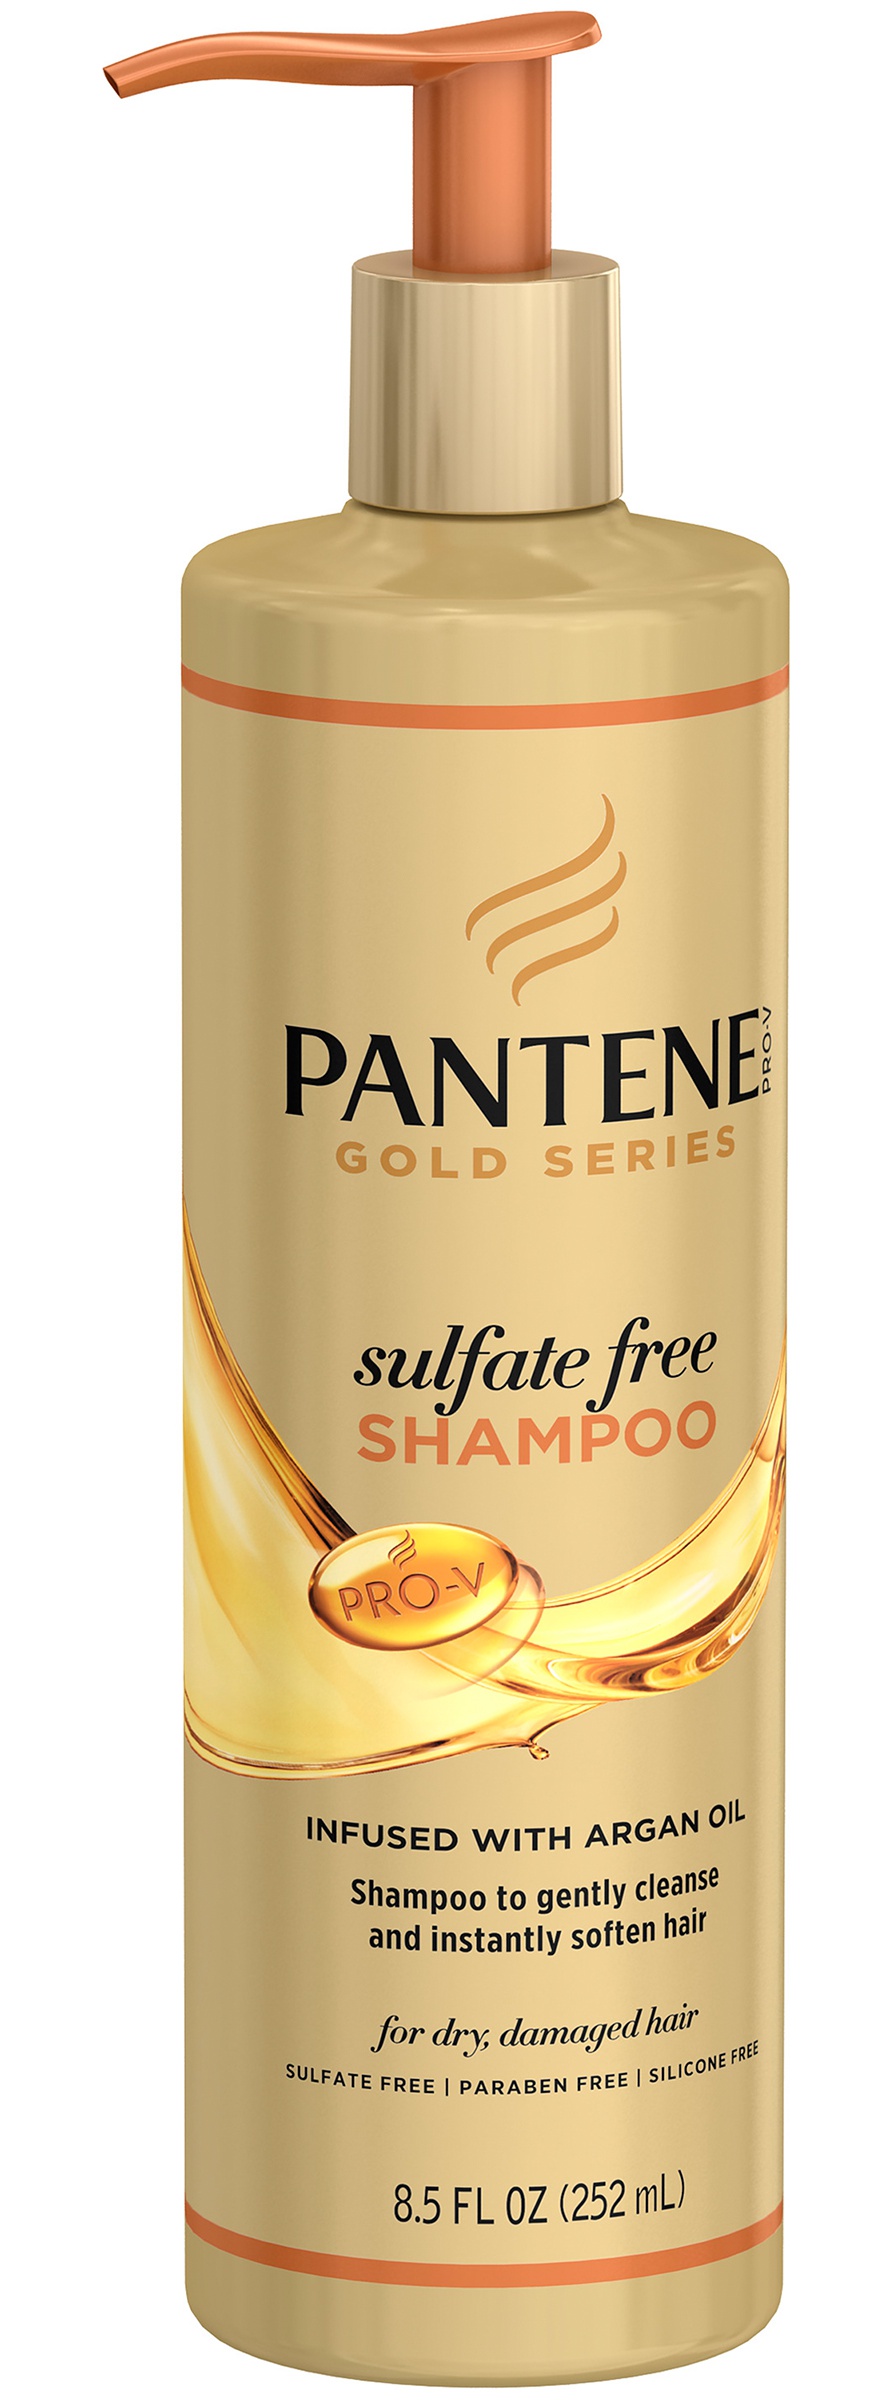 Pantene Gold Series Sulfate Free Shampoo